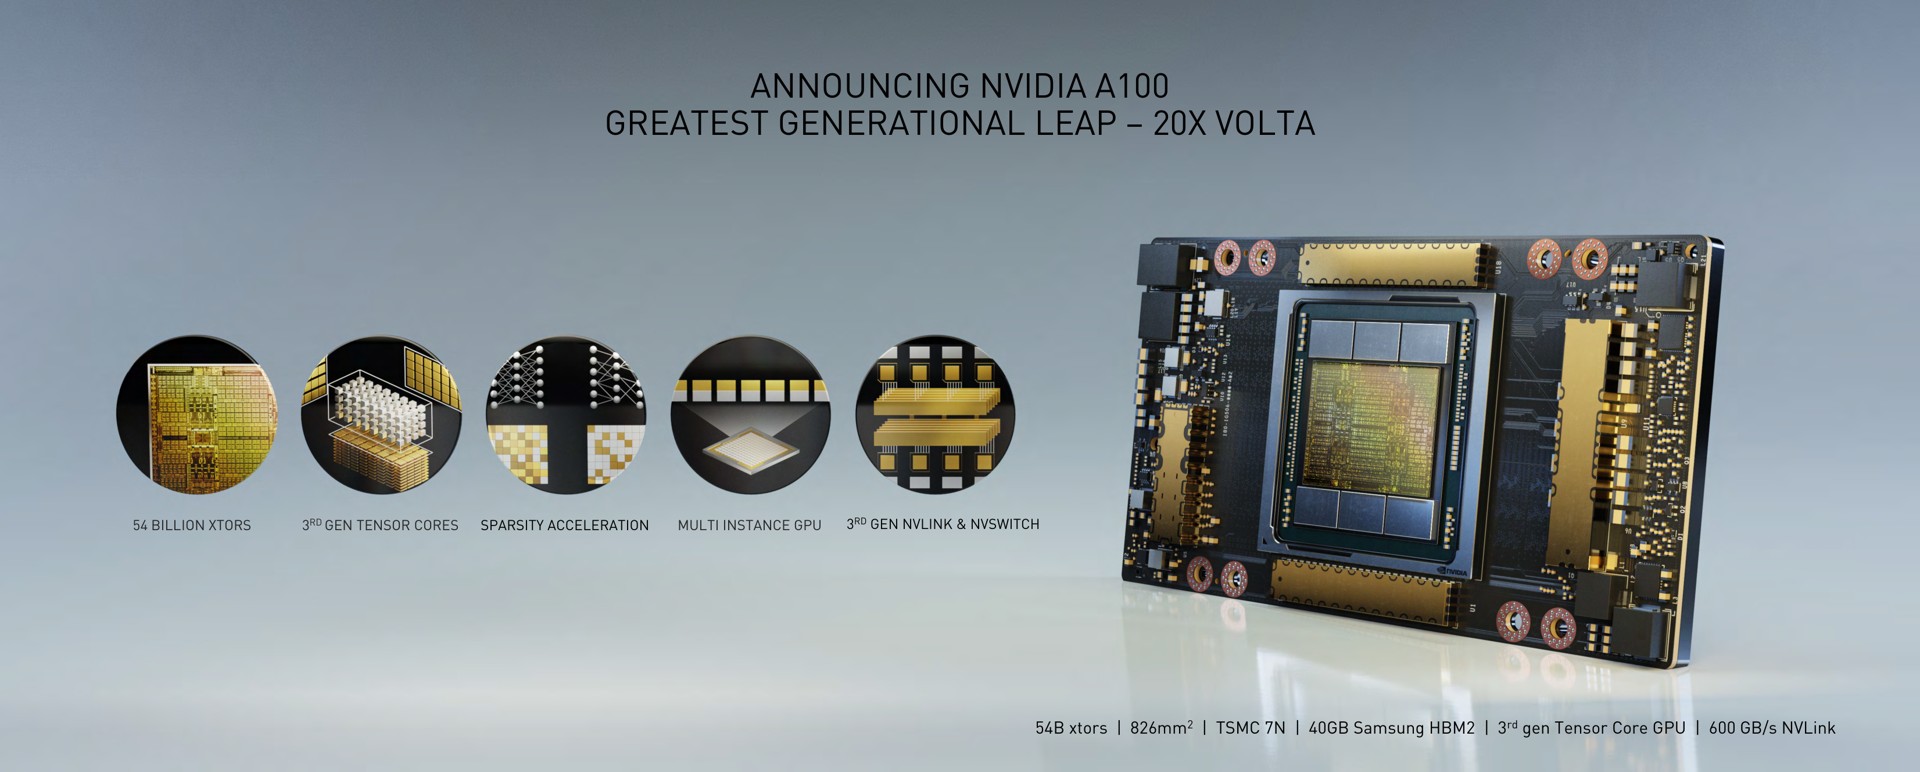 announcing a generational leap | NVIDIA